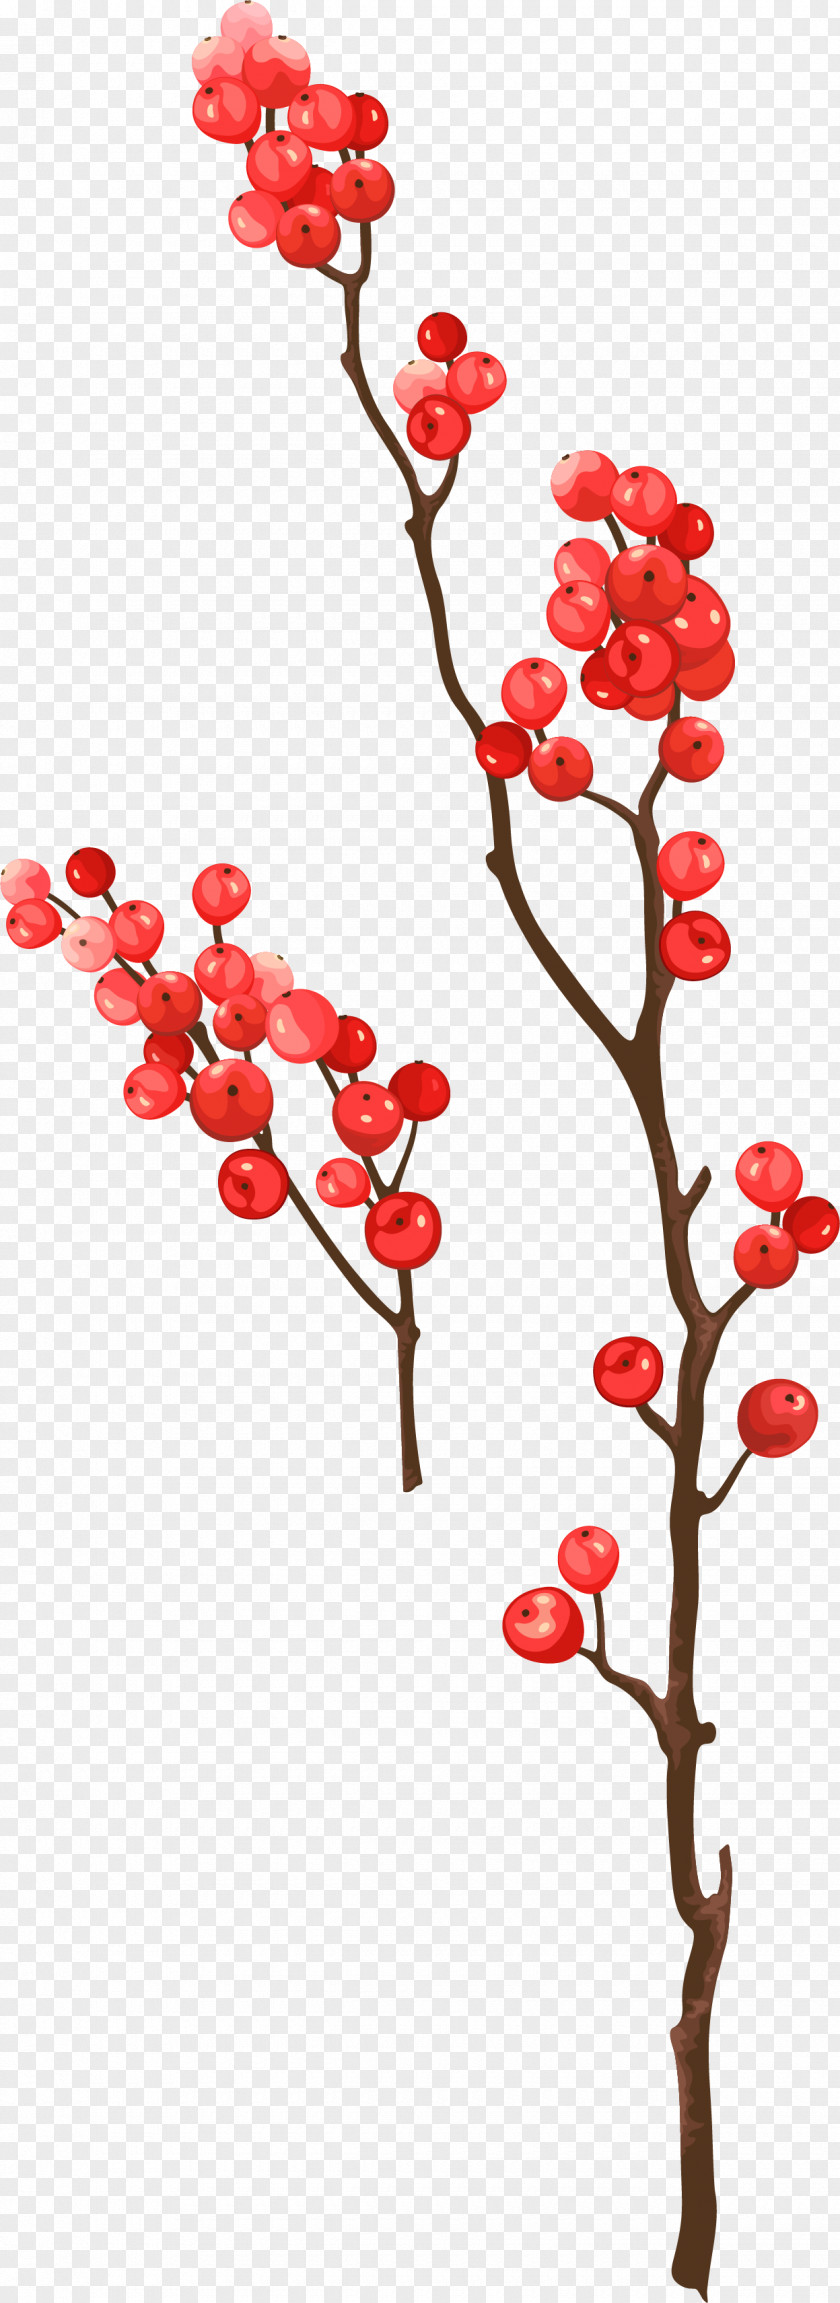 Vector Decorative Red Berries Frutti Di Bosco Berry PNG